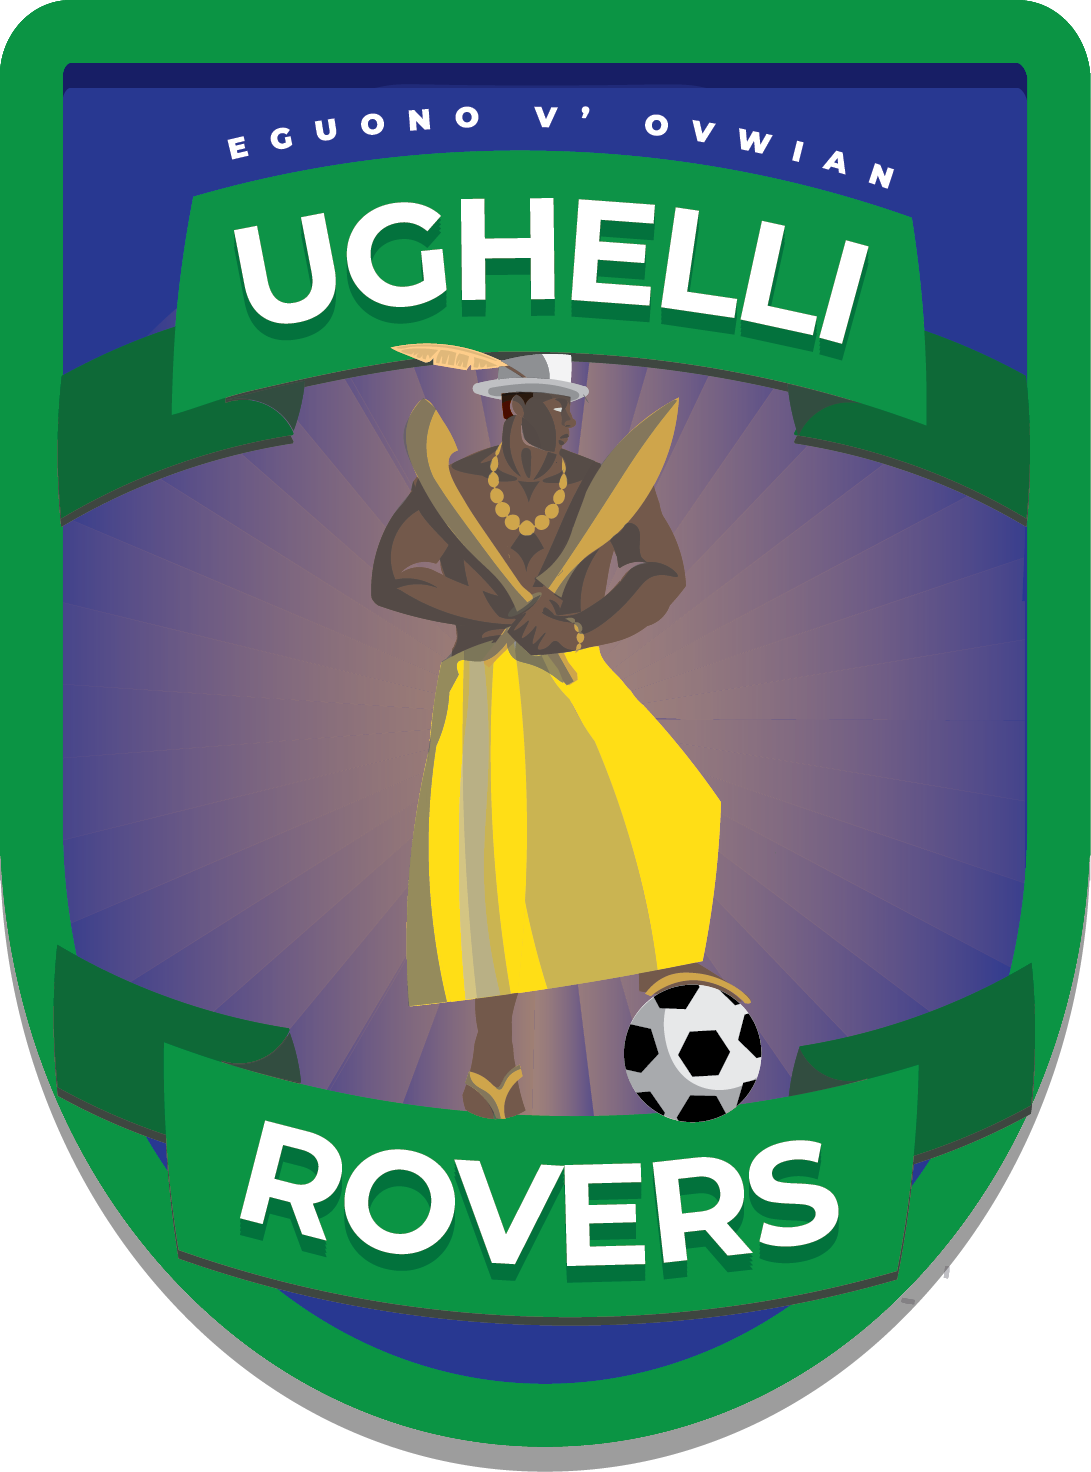 Ughelli Rovers FC